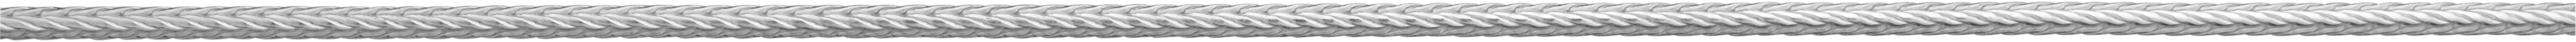 vossestaart ketting zilver 925/- Ø 1,30mm